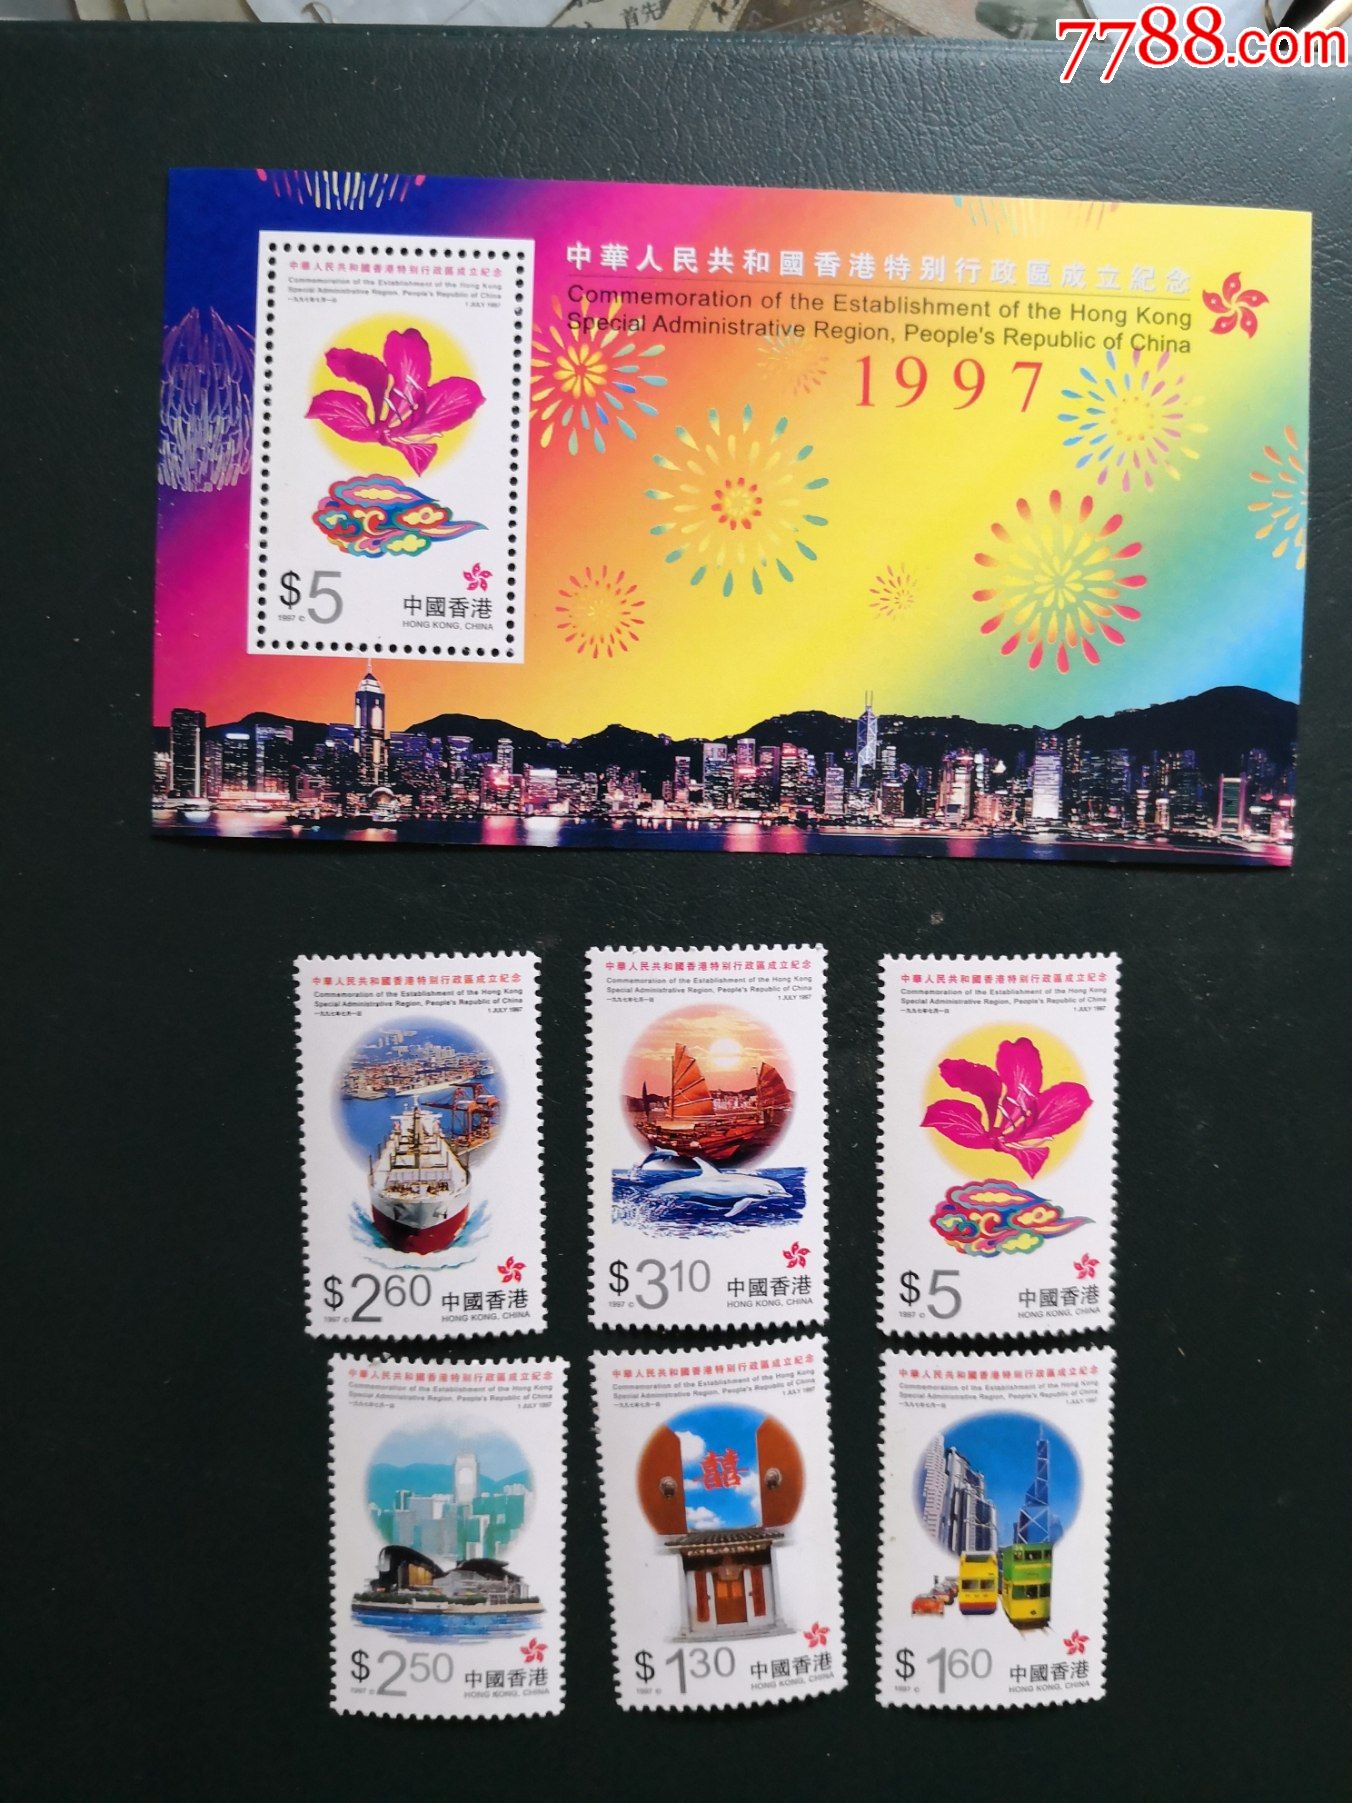 香港回归小型张,邮票